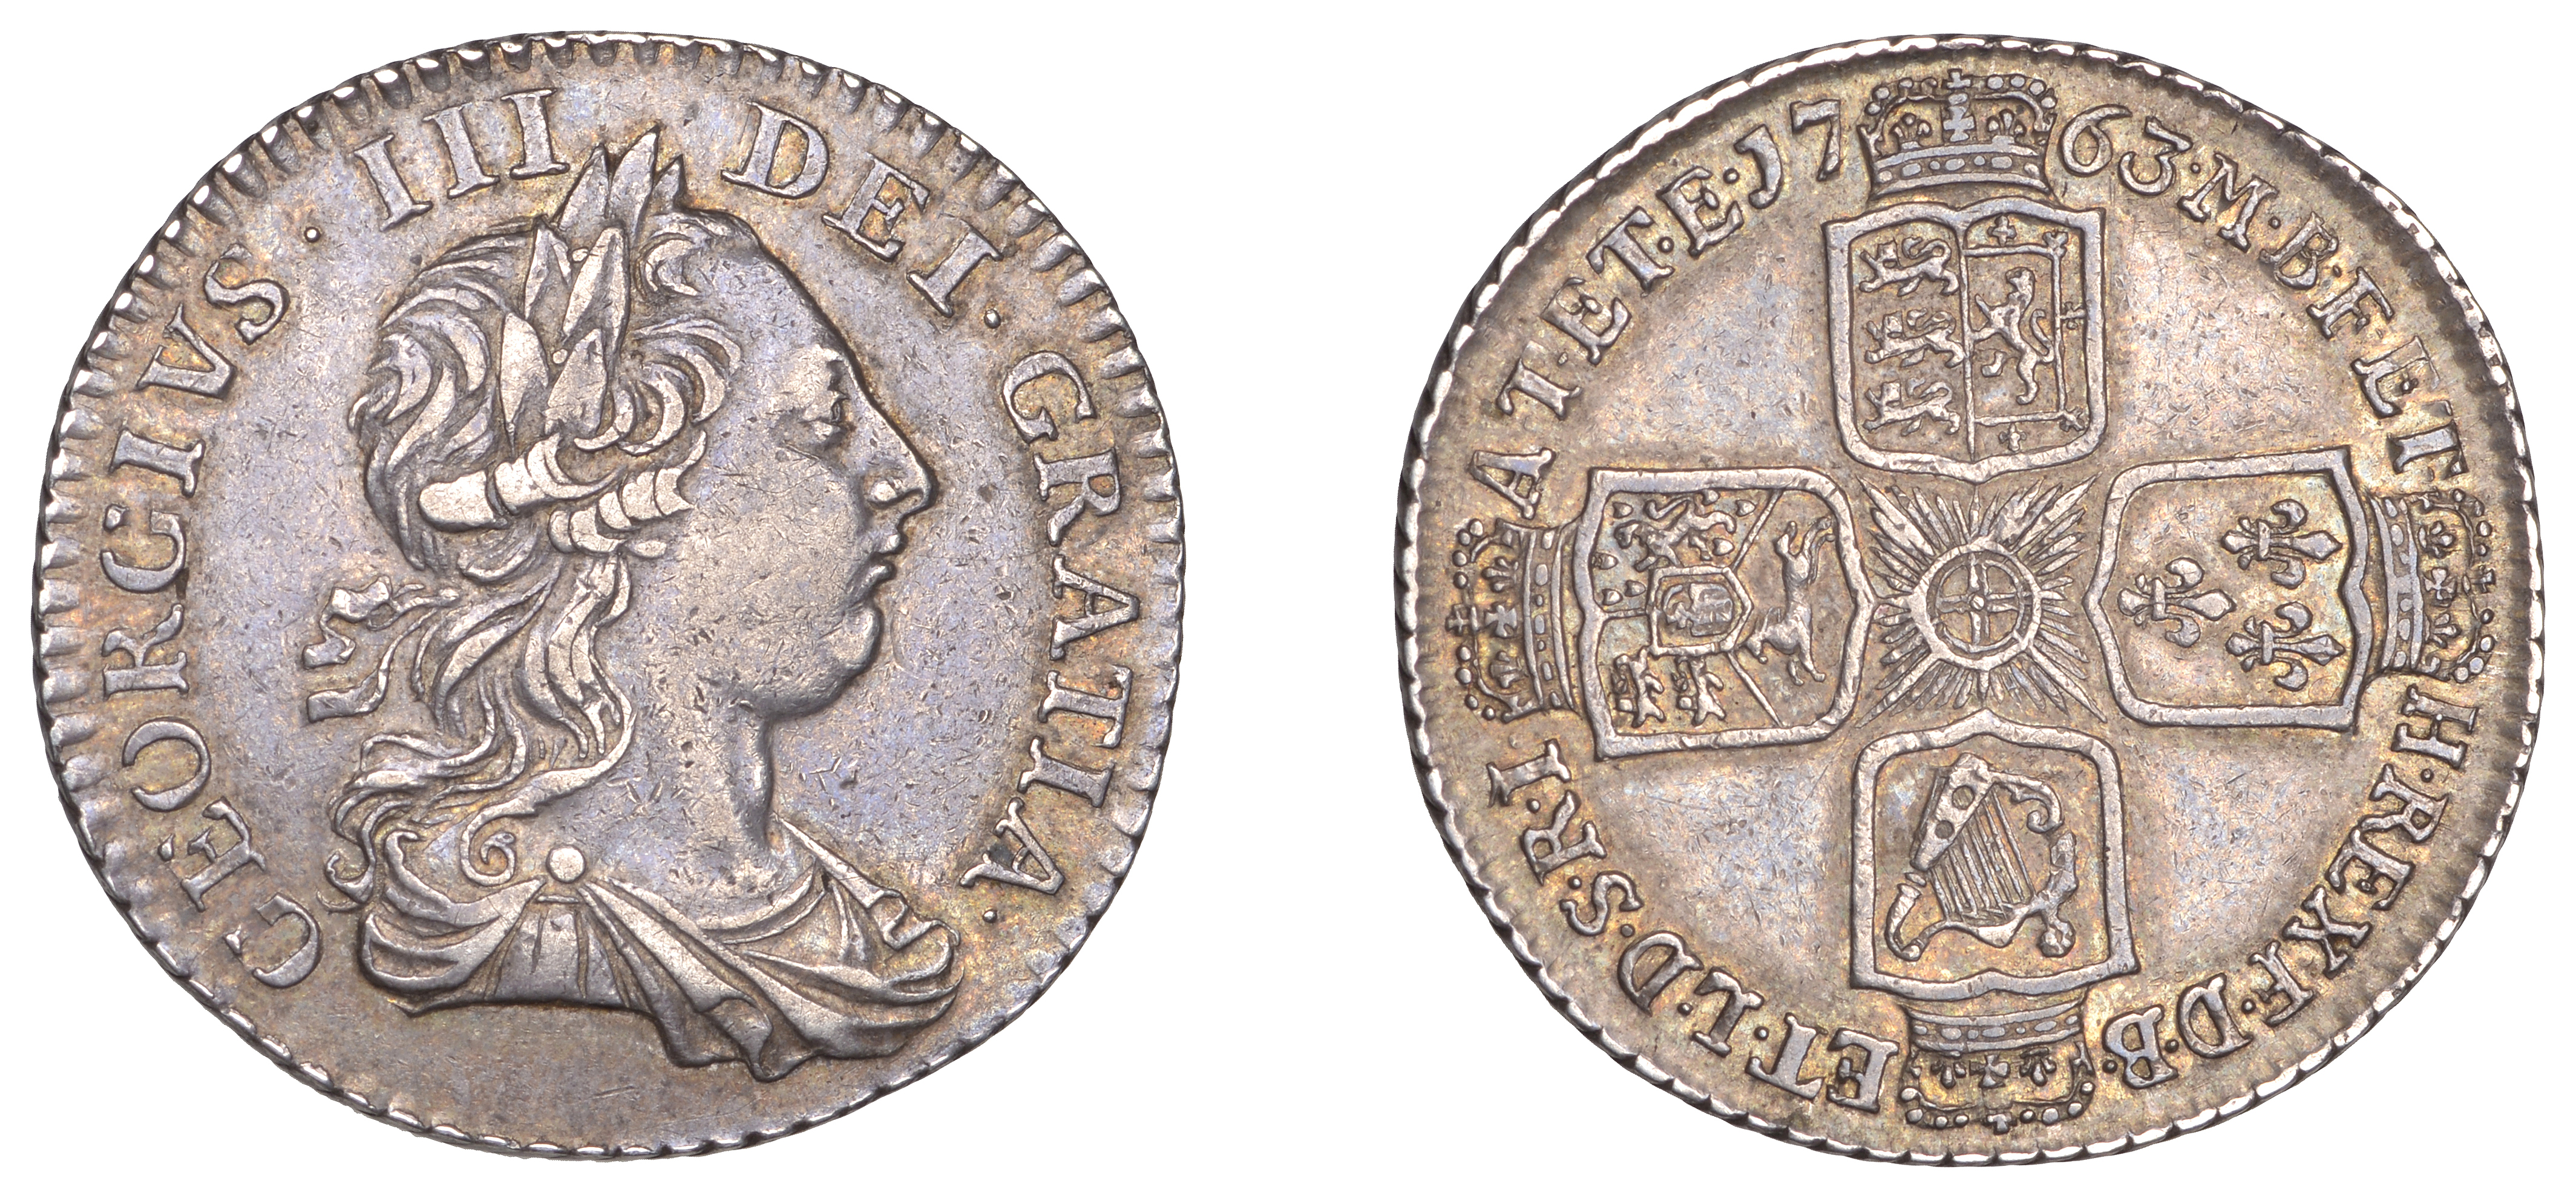 George III (1760-1820), Pre-1816 issues, 'Northumberland' Shilling, 1763 (ESC 2124; S 3742)....